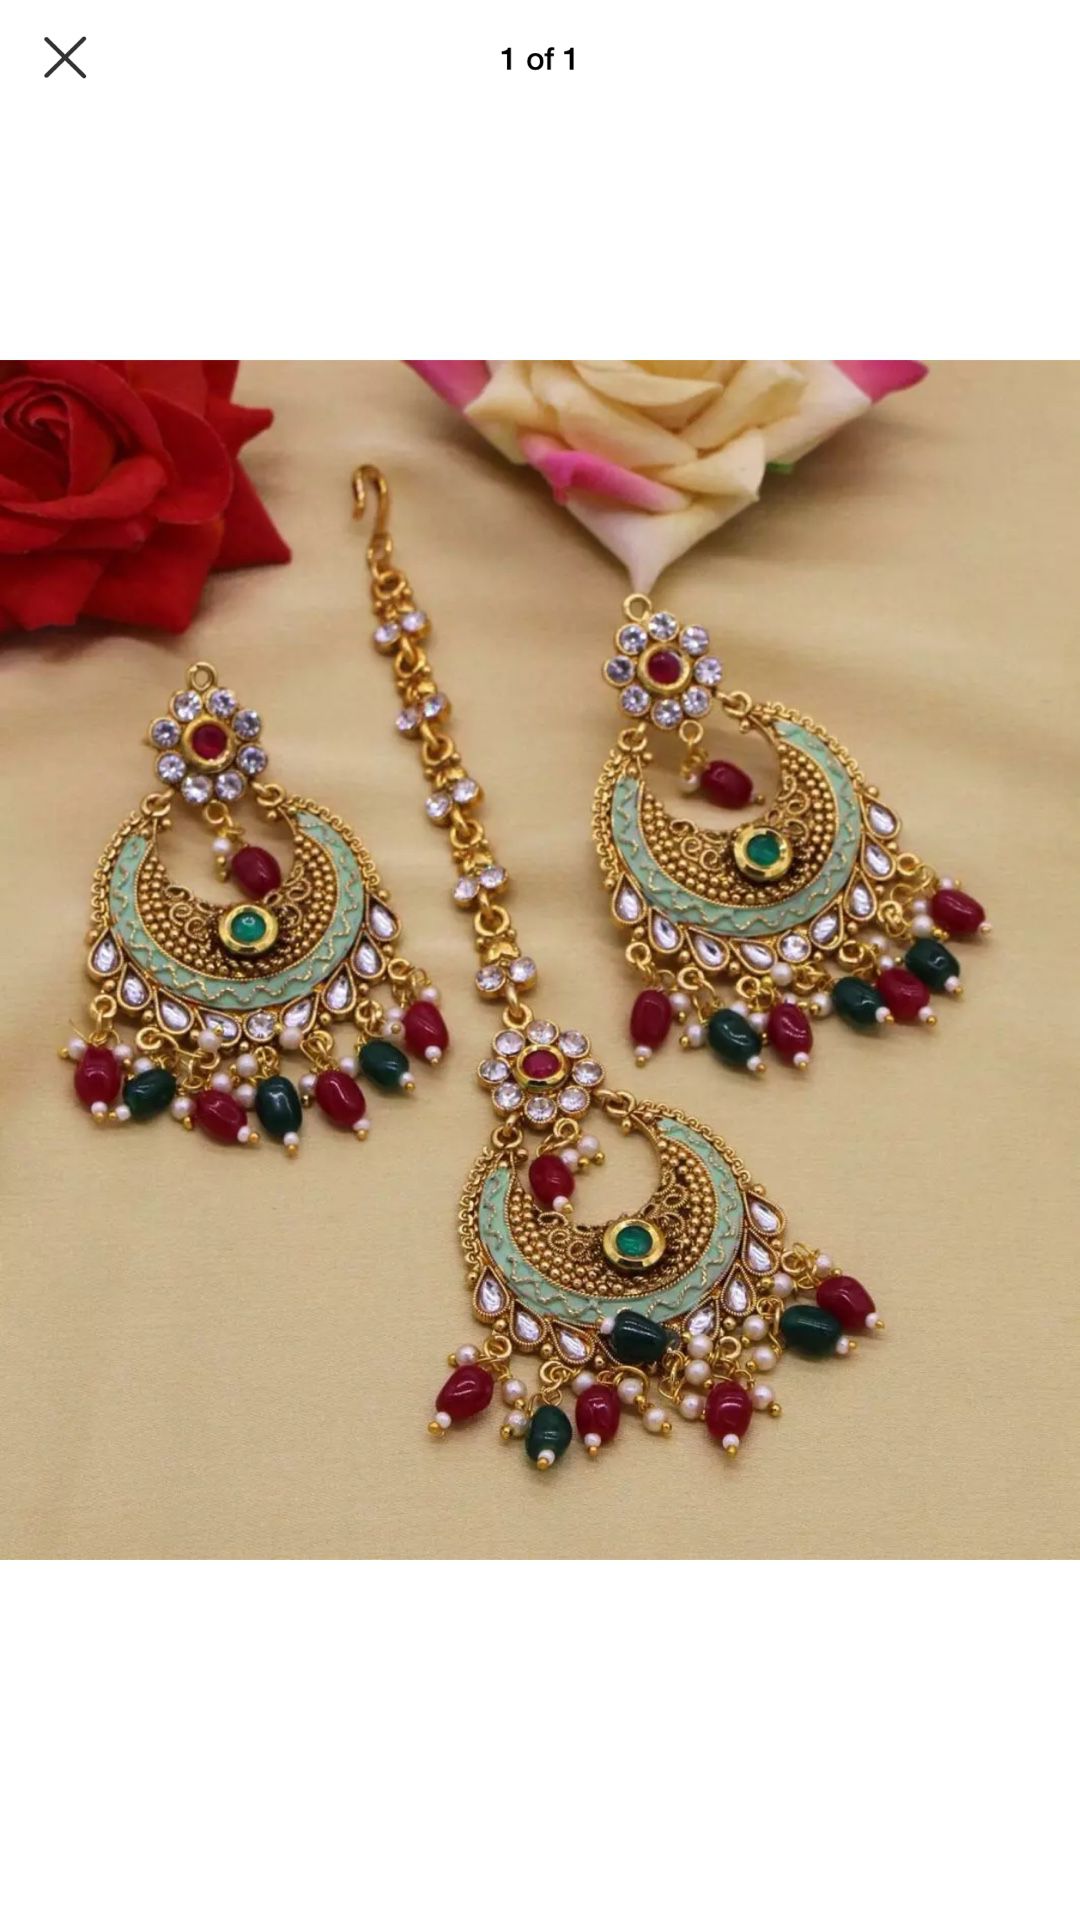 Indian gold tone Kundan handmade tikka earrings Bollywood style party wedding jewelry